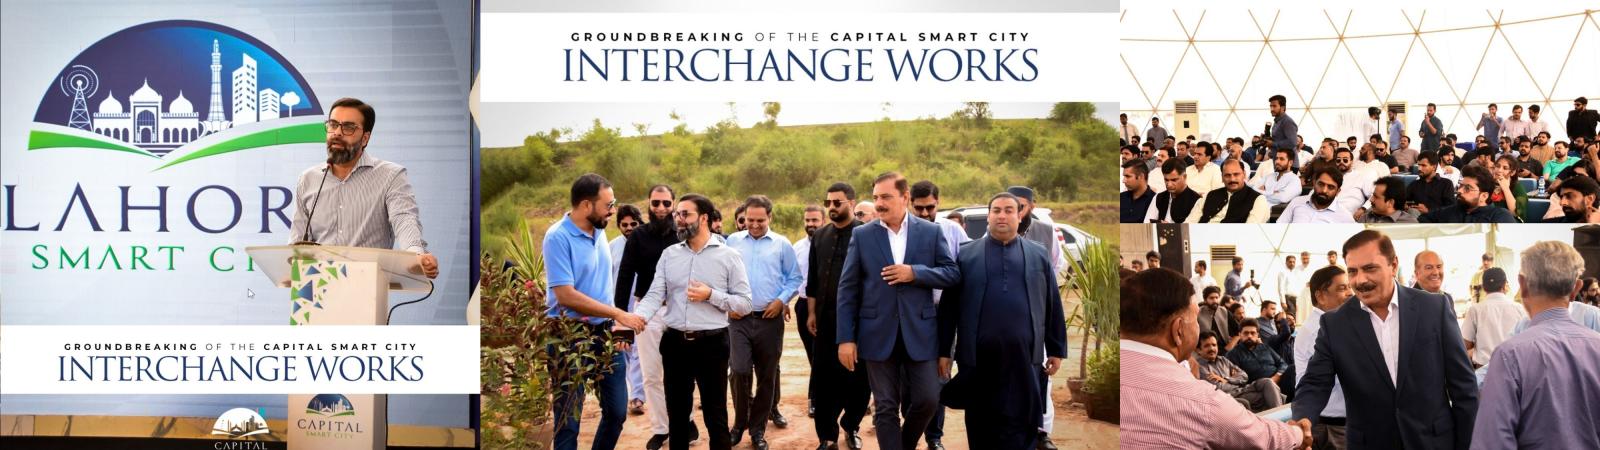 Ground Breaking of Capital Smart City Interchange Works